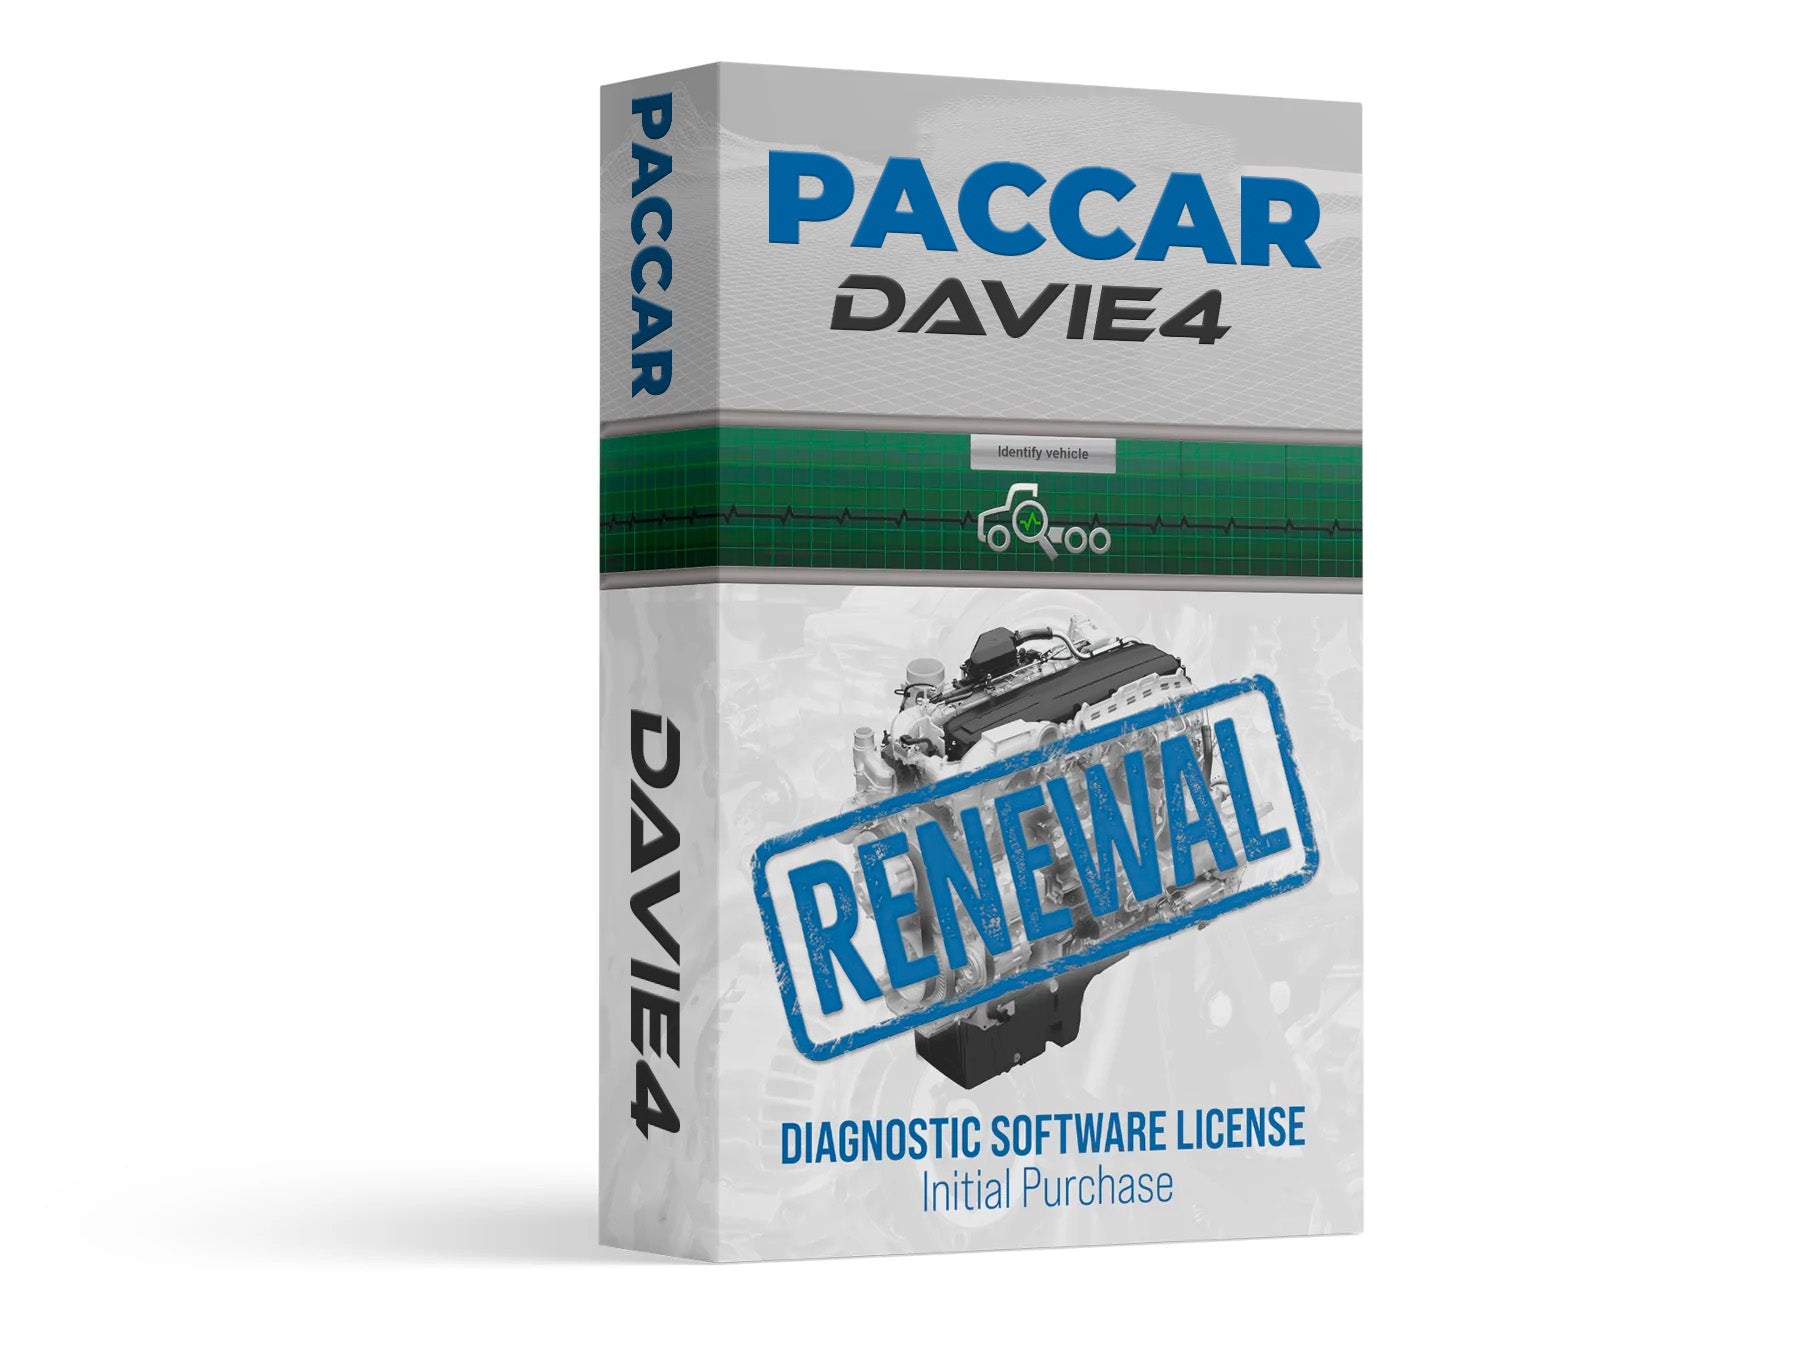 PACCAR Davie4 Diagnostic Software License Annual Renewal